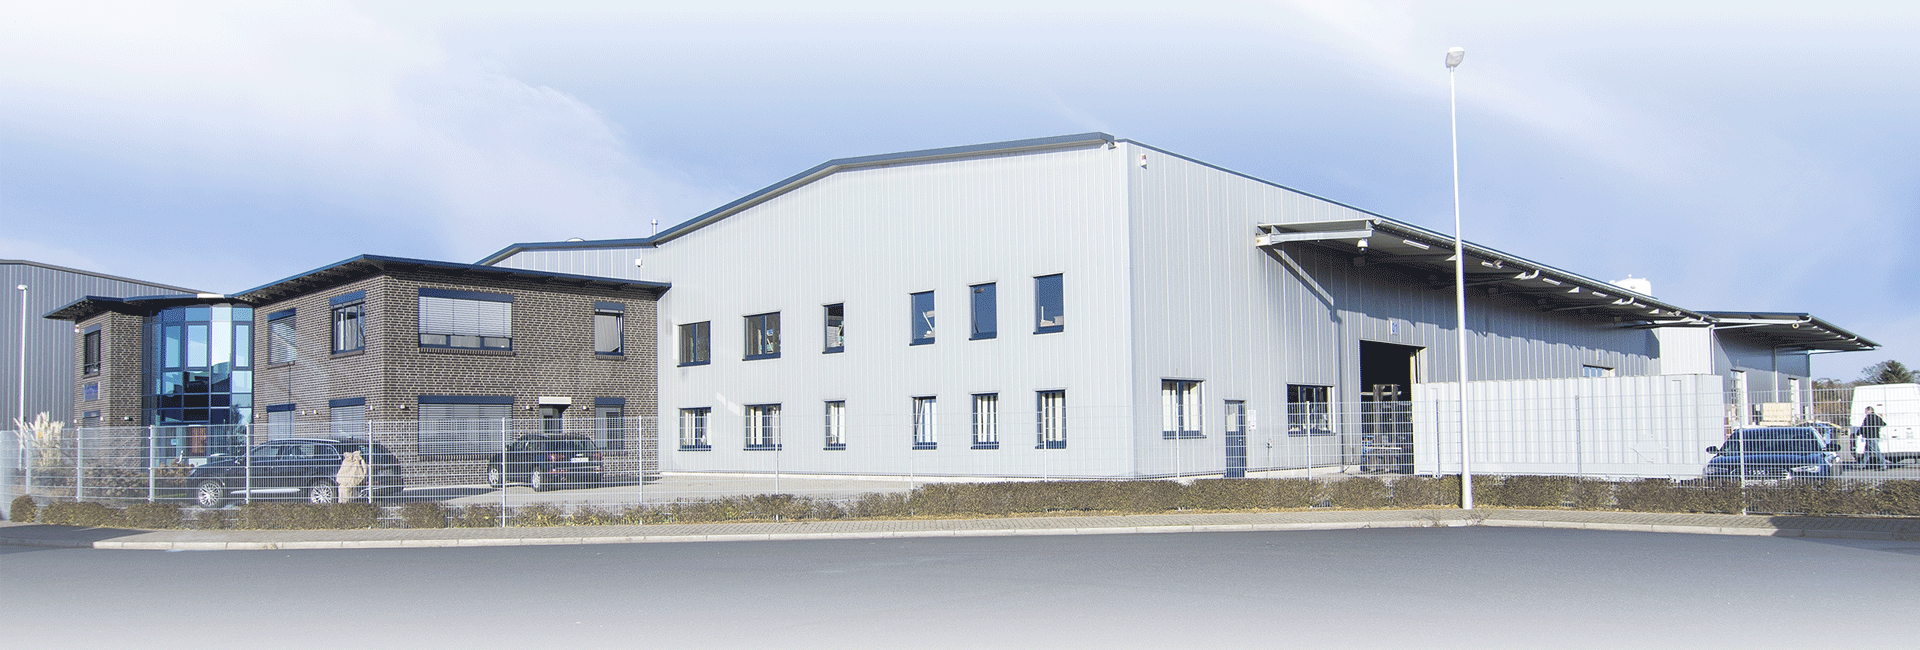 J. Klose Maschinenbau GmbH & Co. KG - Firmengebäude